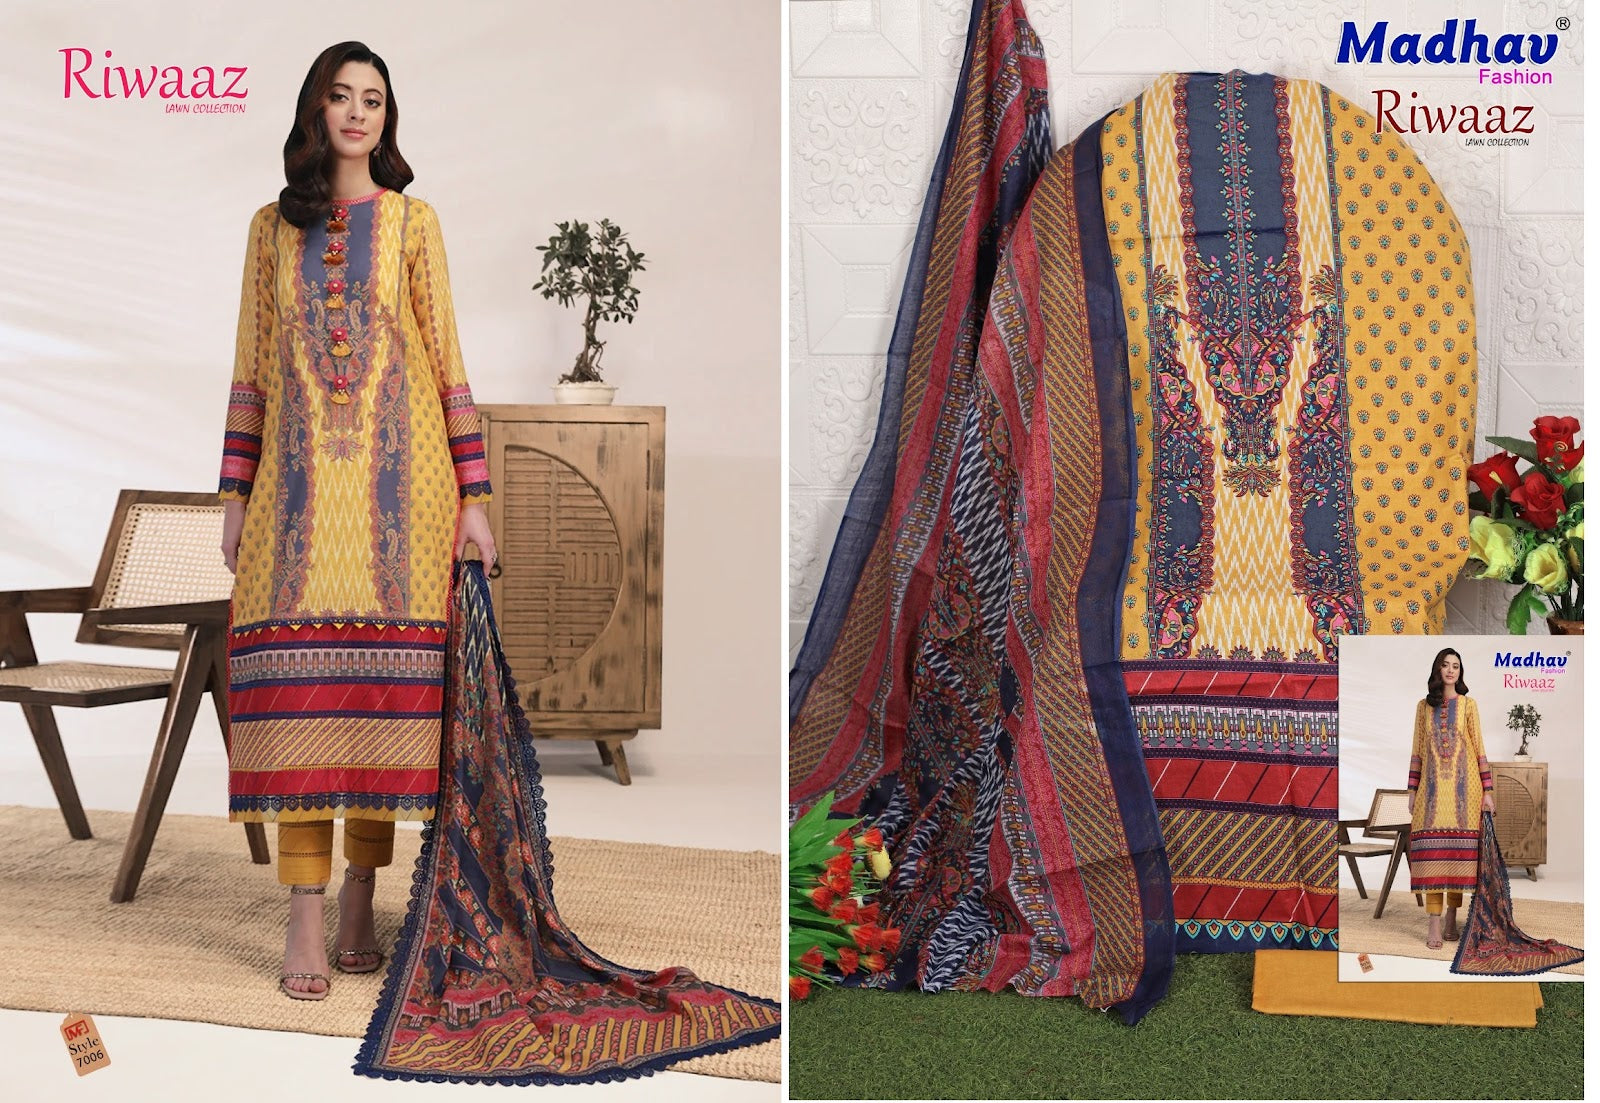 Riwaaz Vol 7 Madhav Fashion Karachi Salwar Suits